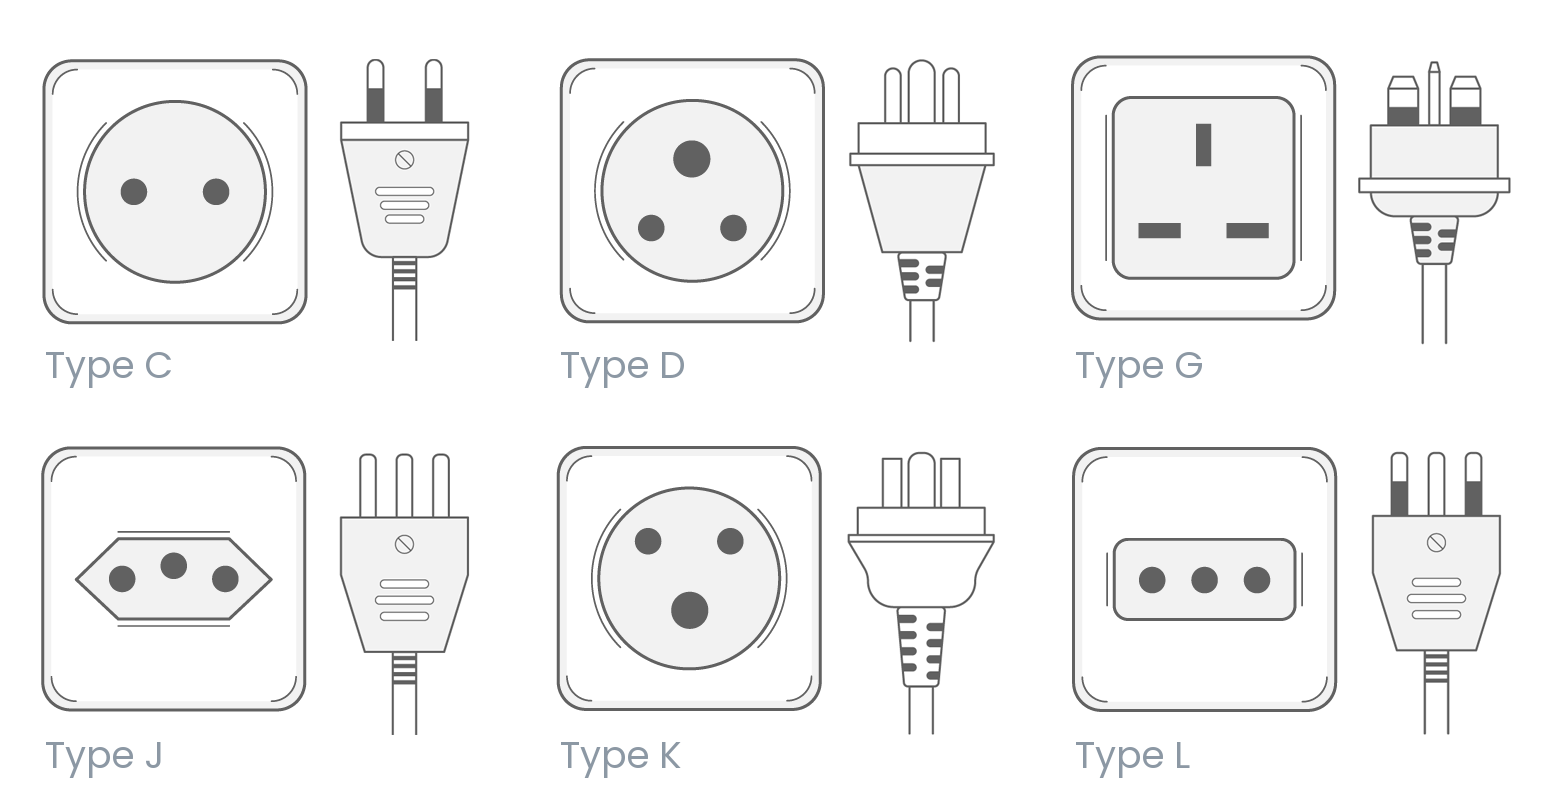 Maldives power plug outlet type K